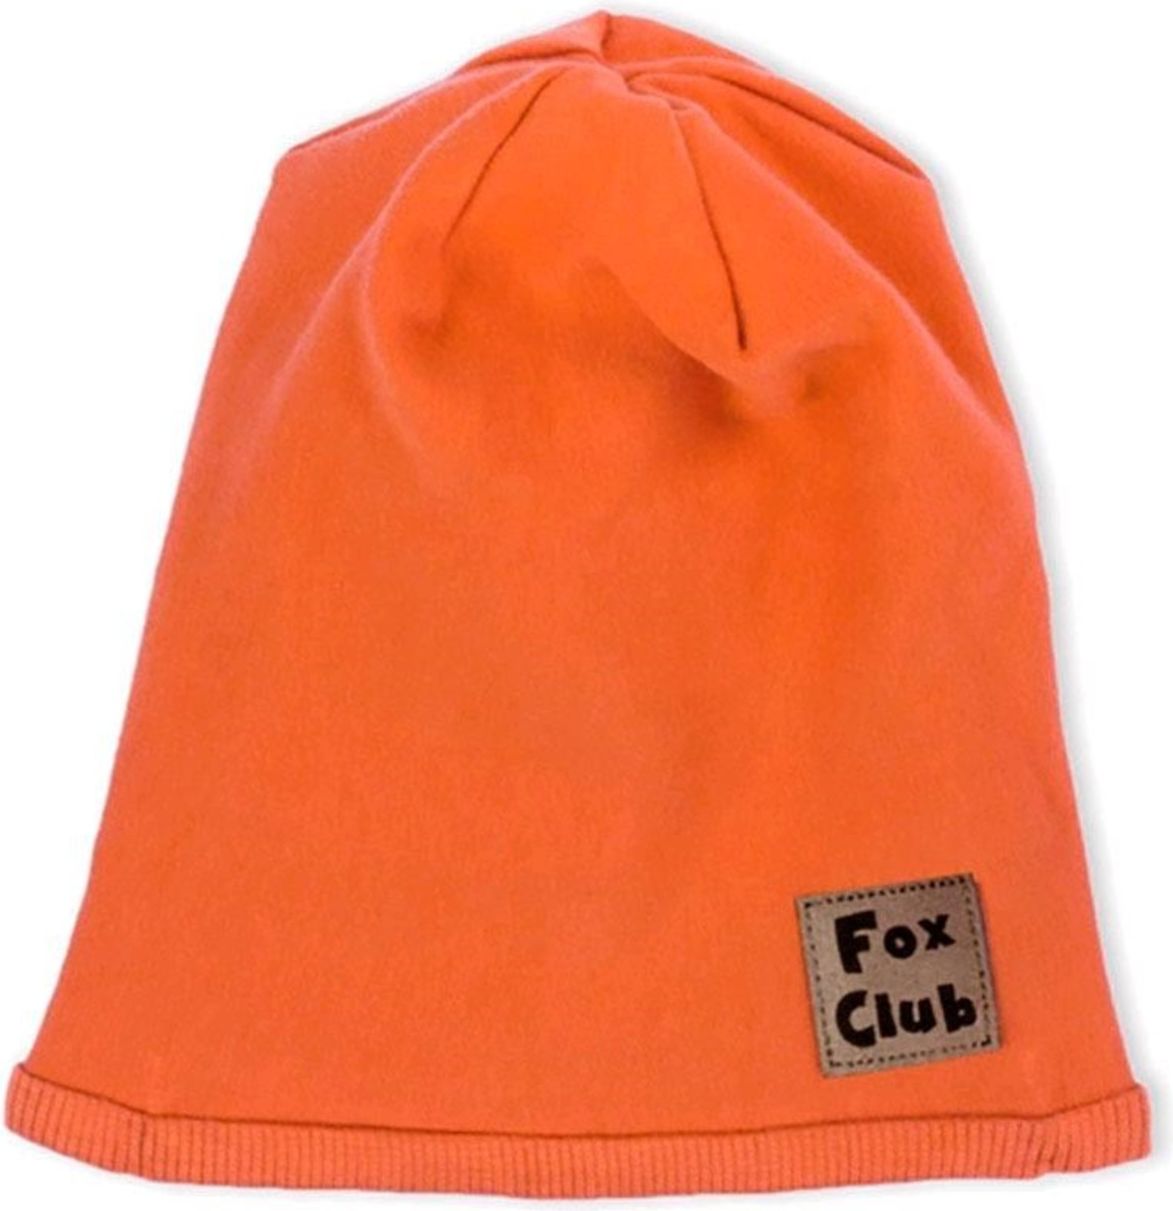 Kojenecká bavlněná čepička Nicol Fox Club oranžová - Kojenecká bavlněná čepička Nicol Fox Club oranžová - obrázek 1